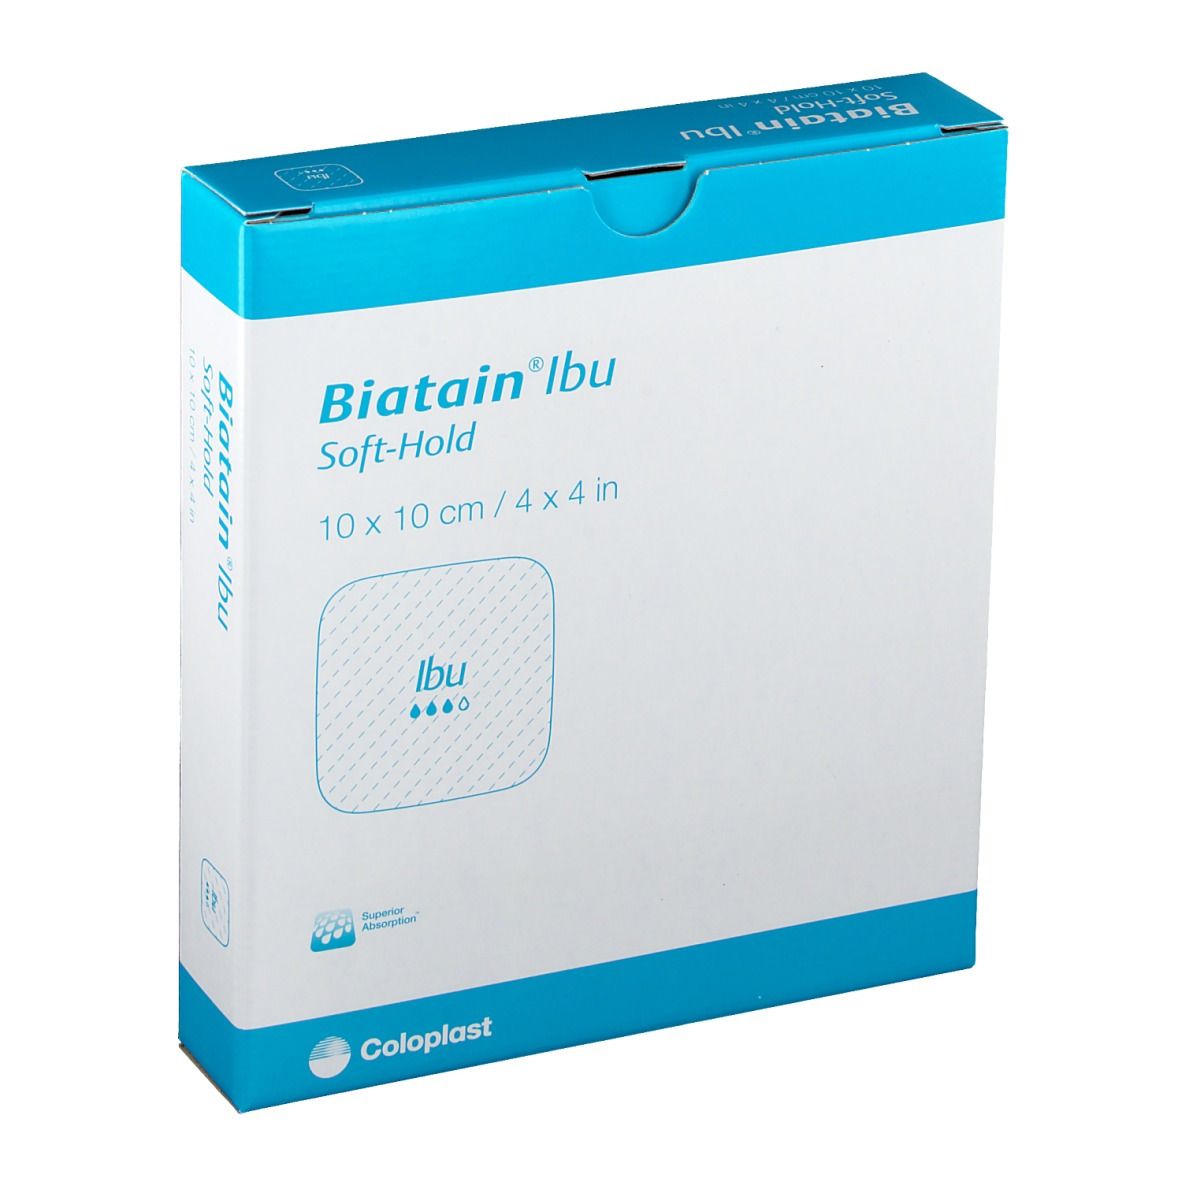 Biatain® Ibu Schaumverband mit Ibuprofen sanft-haftend 10x10cm